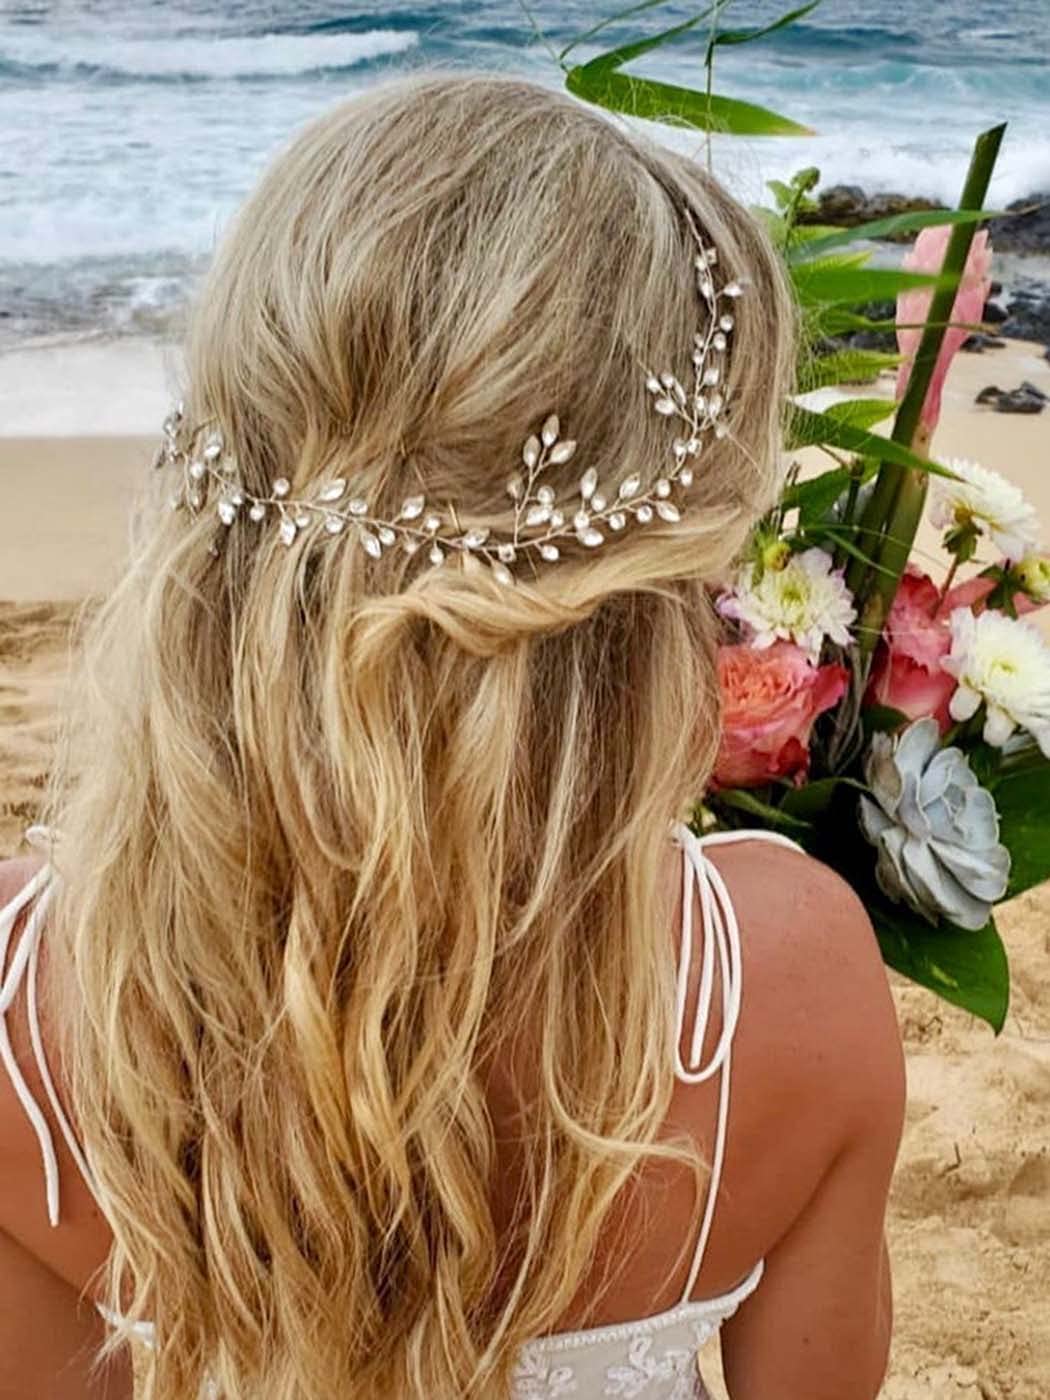 Bride Wedding Rhinestone Hair Vine Bridal Silver Hair Piece Crystal Headband Hair Accessories for Women and Girls